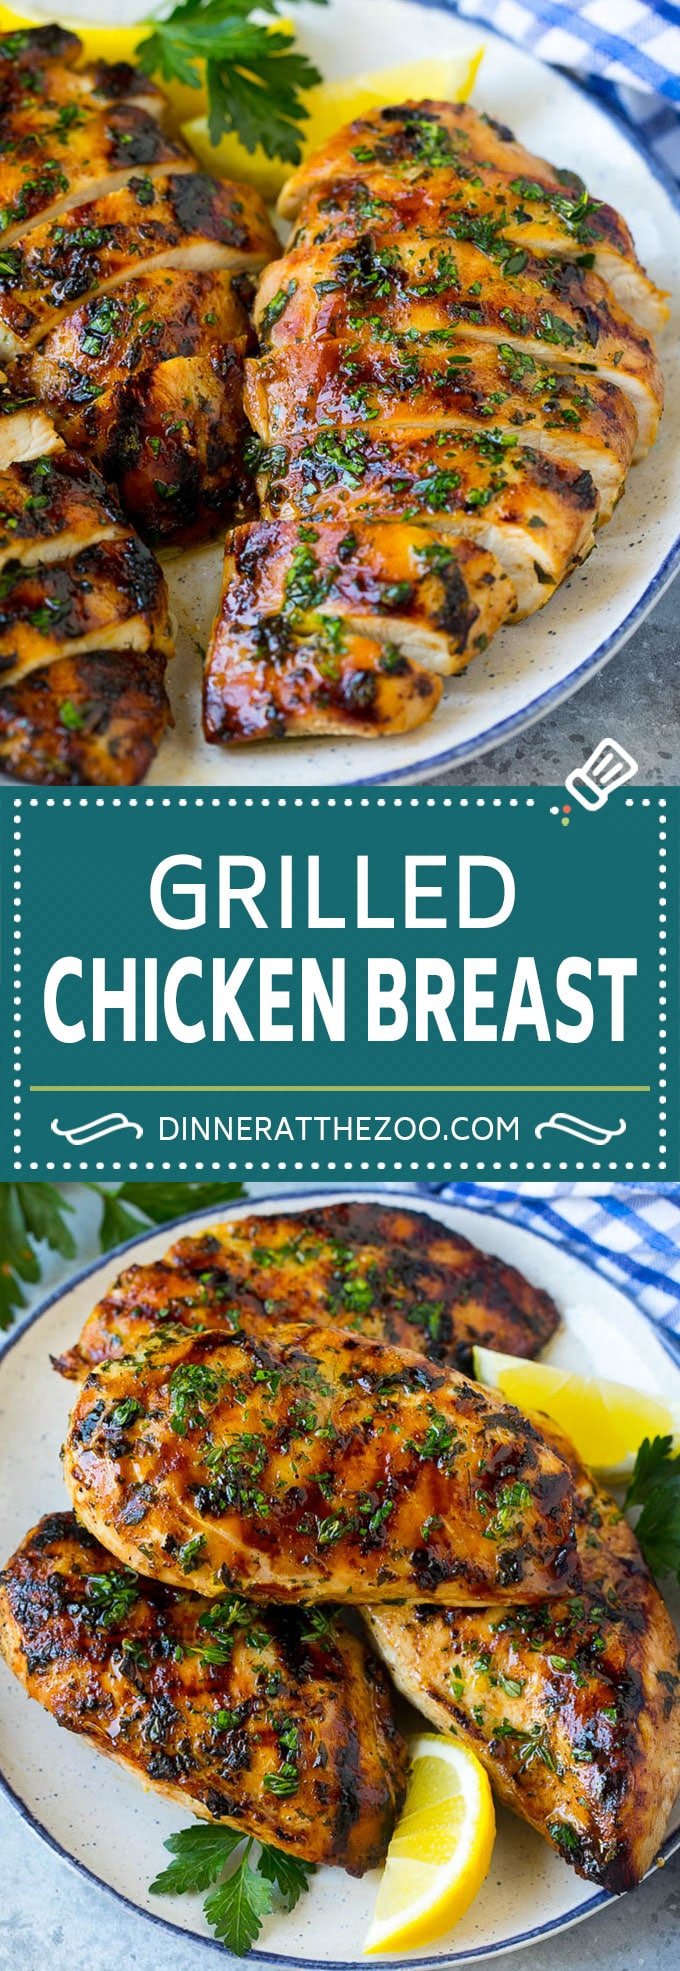 Grilled Chicken Breast Recipe | Marinated Chicken Breast | Chicken Marinade #chicken #grilling #marinade #summer #dinner #dinneratthezoo